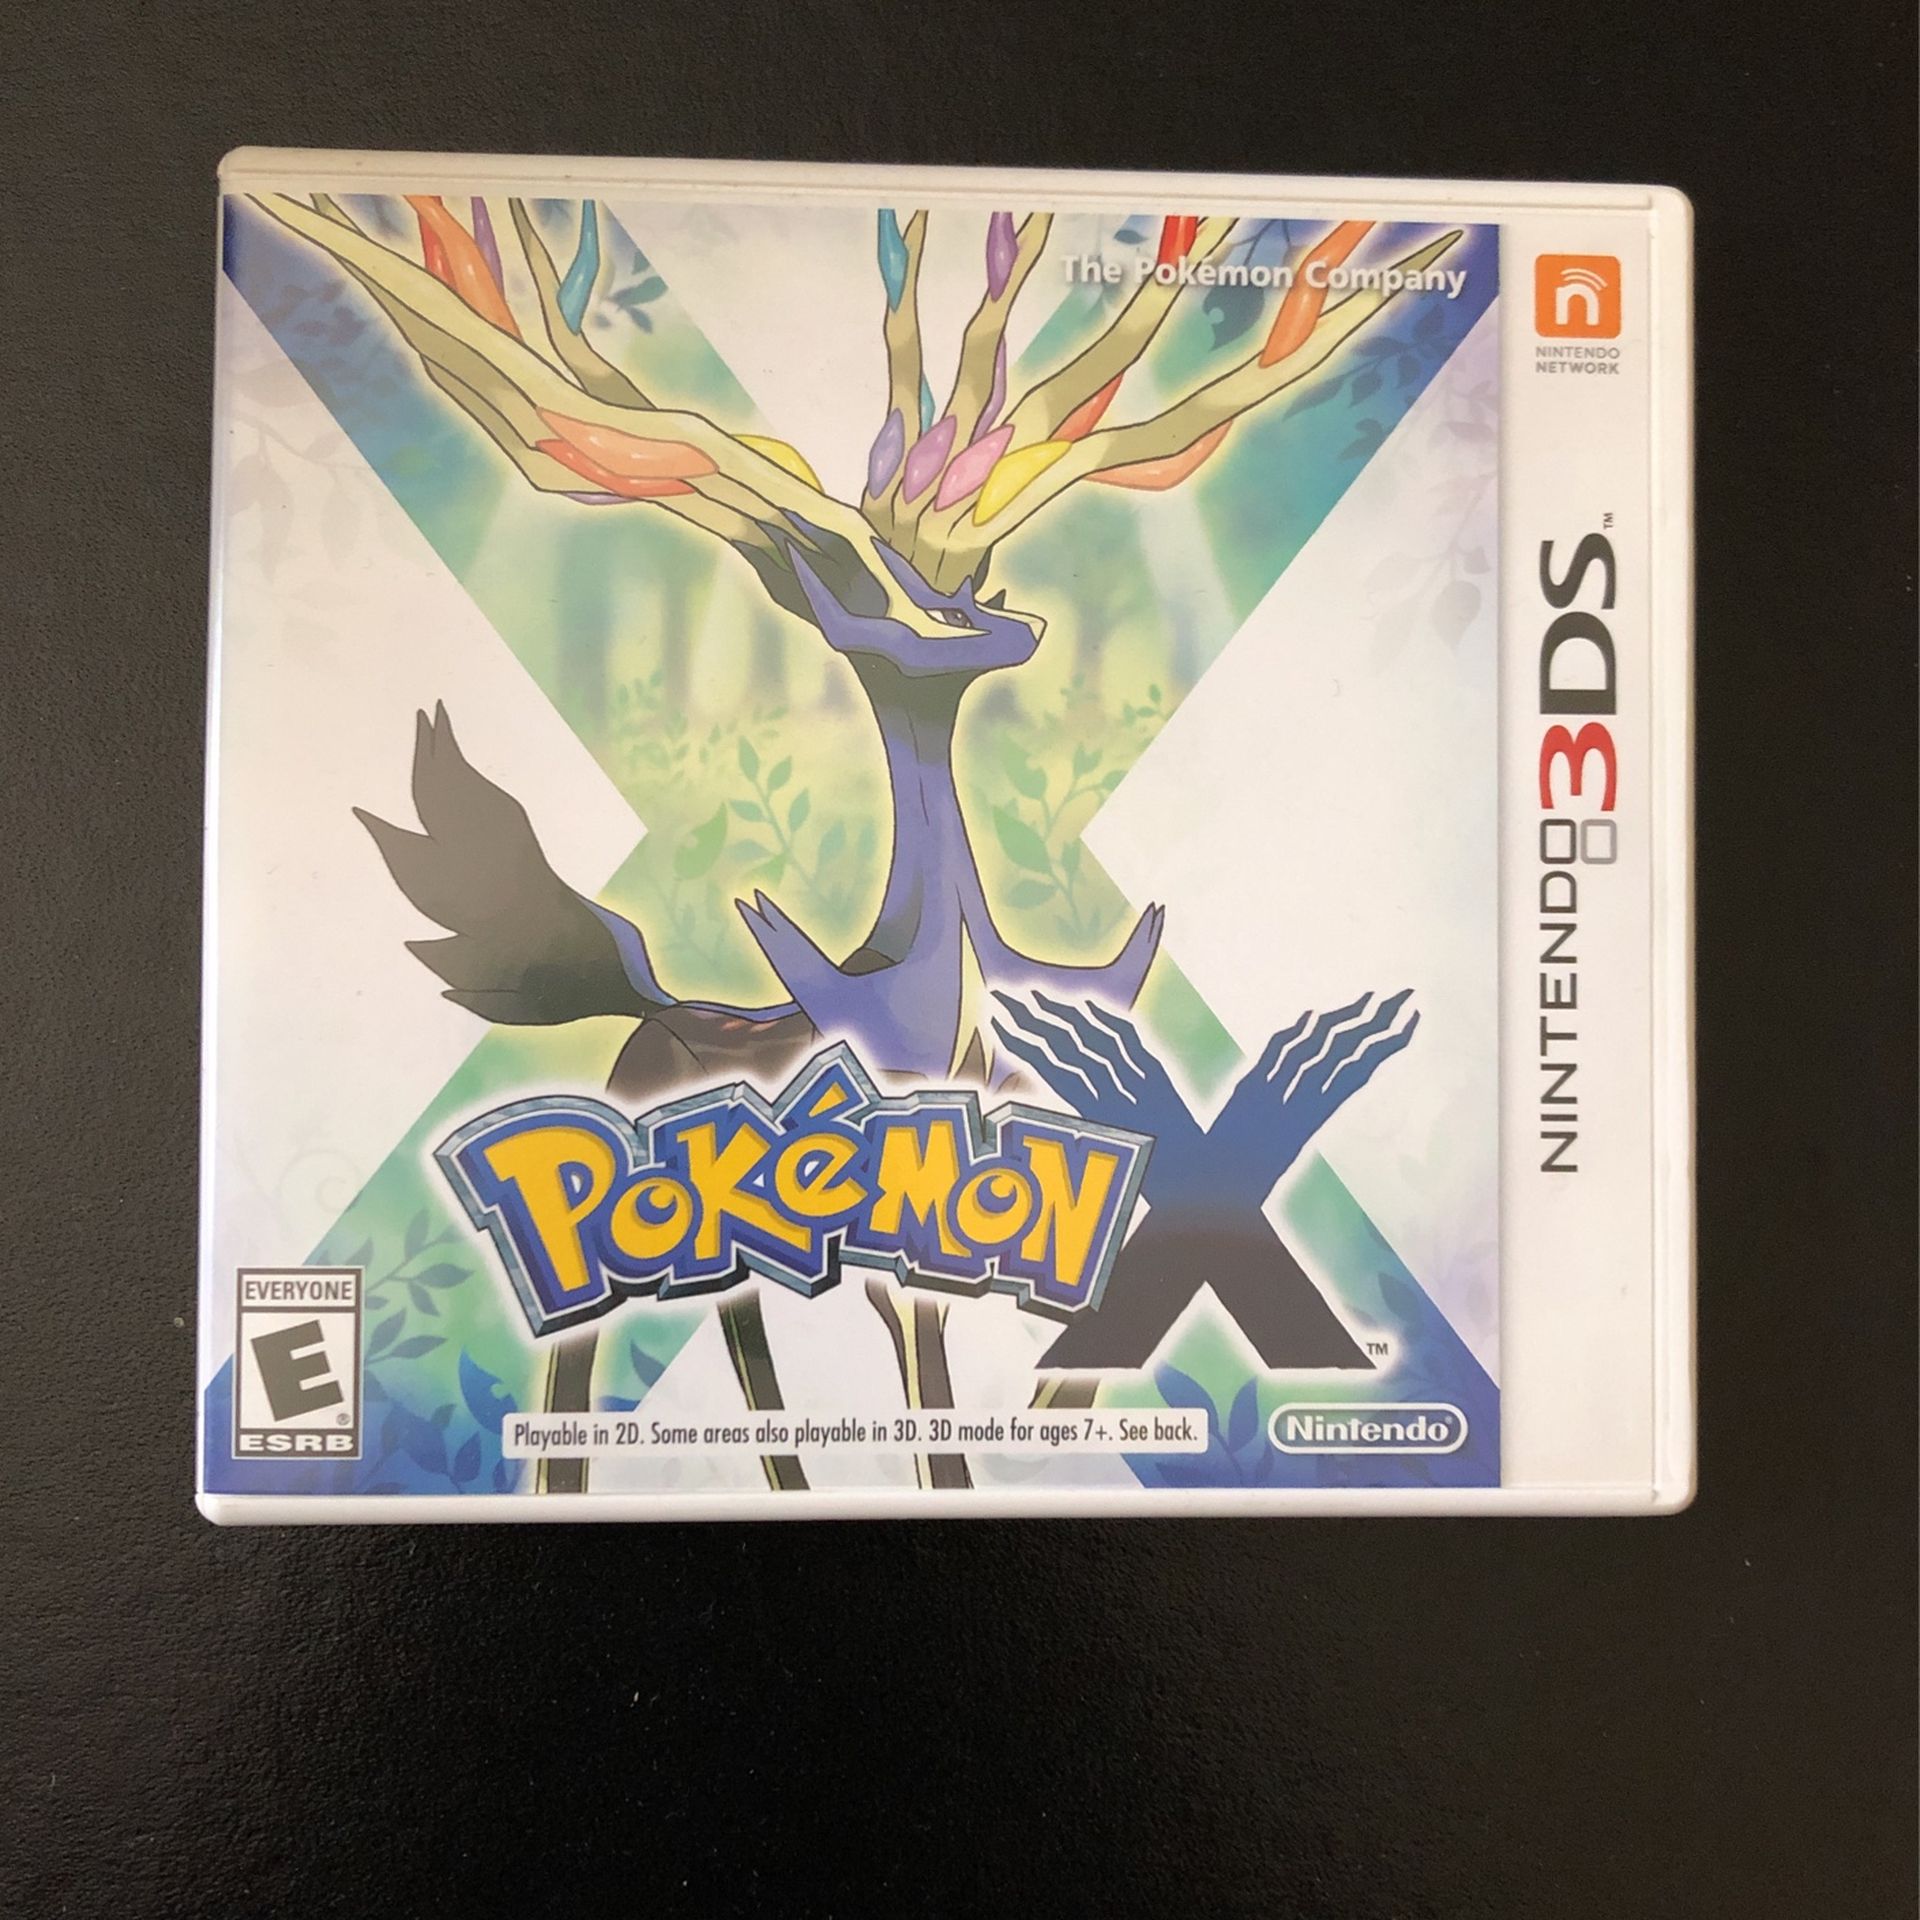 Pokémon x Nintendo 3D game. Used